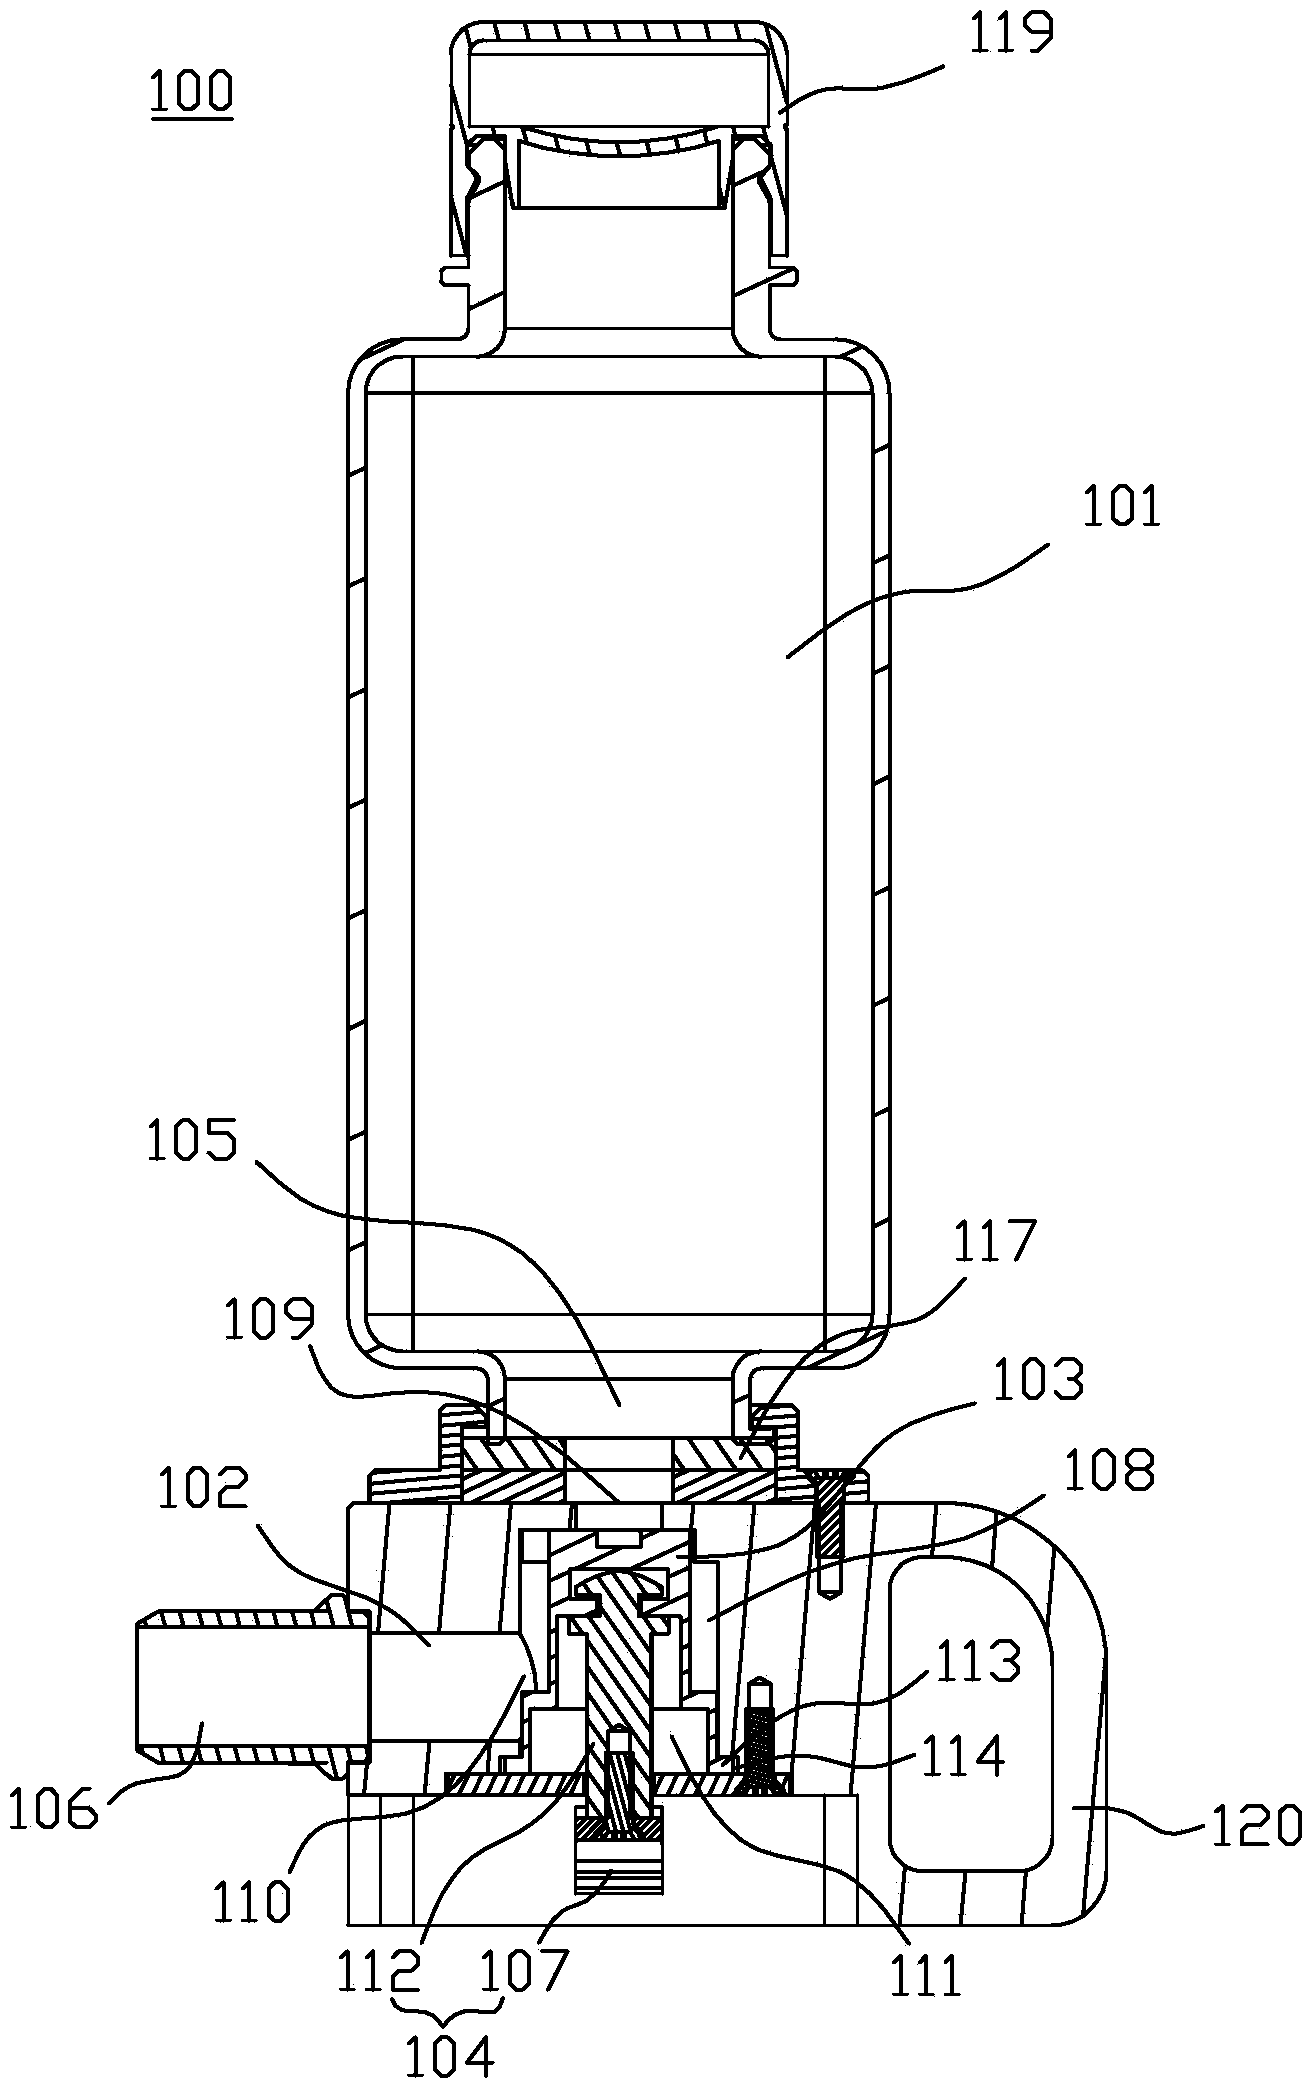 Liquid stocker, stocker driving mechanism and liquid batching system